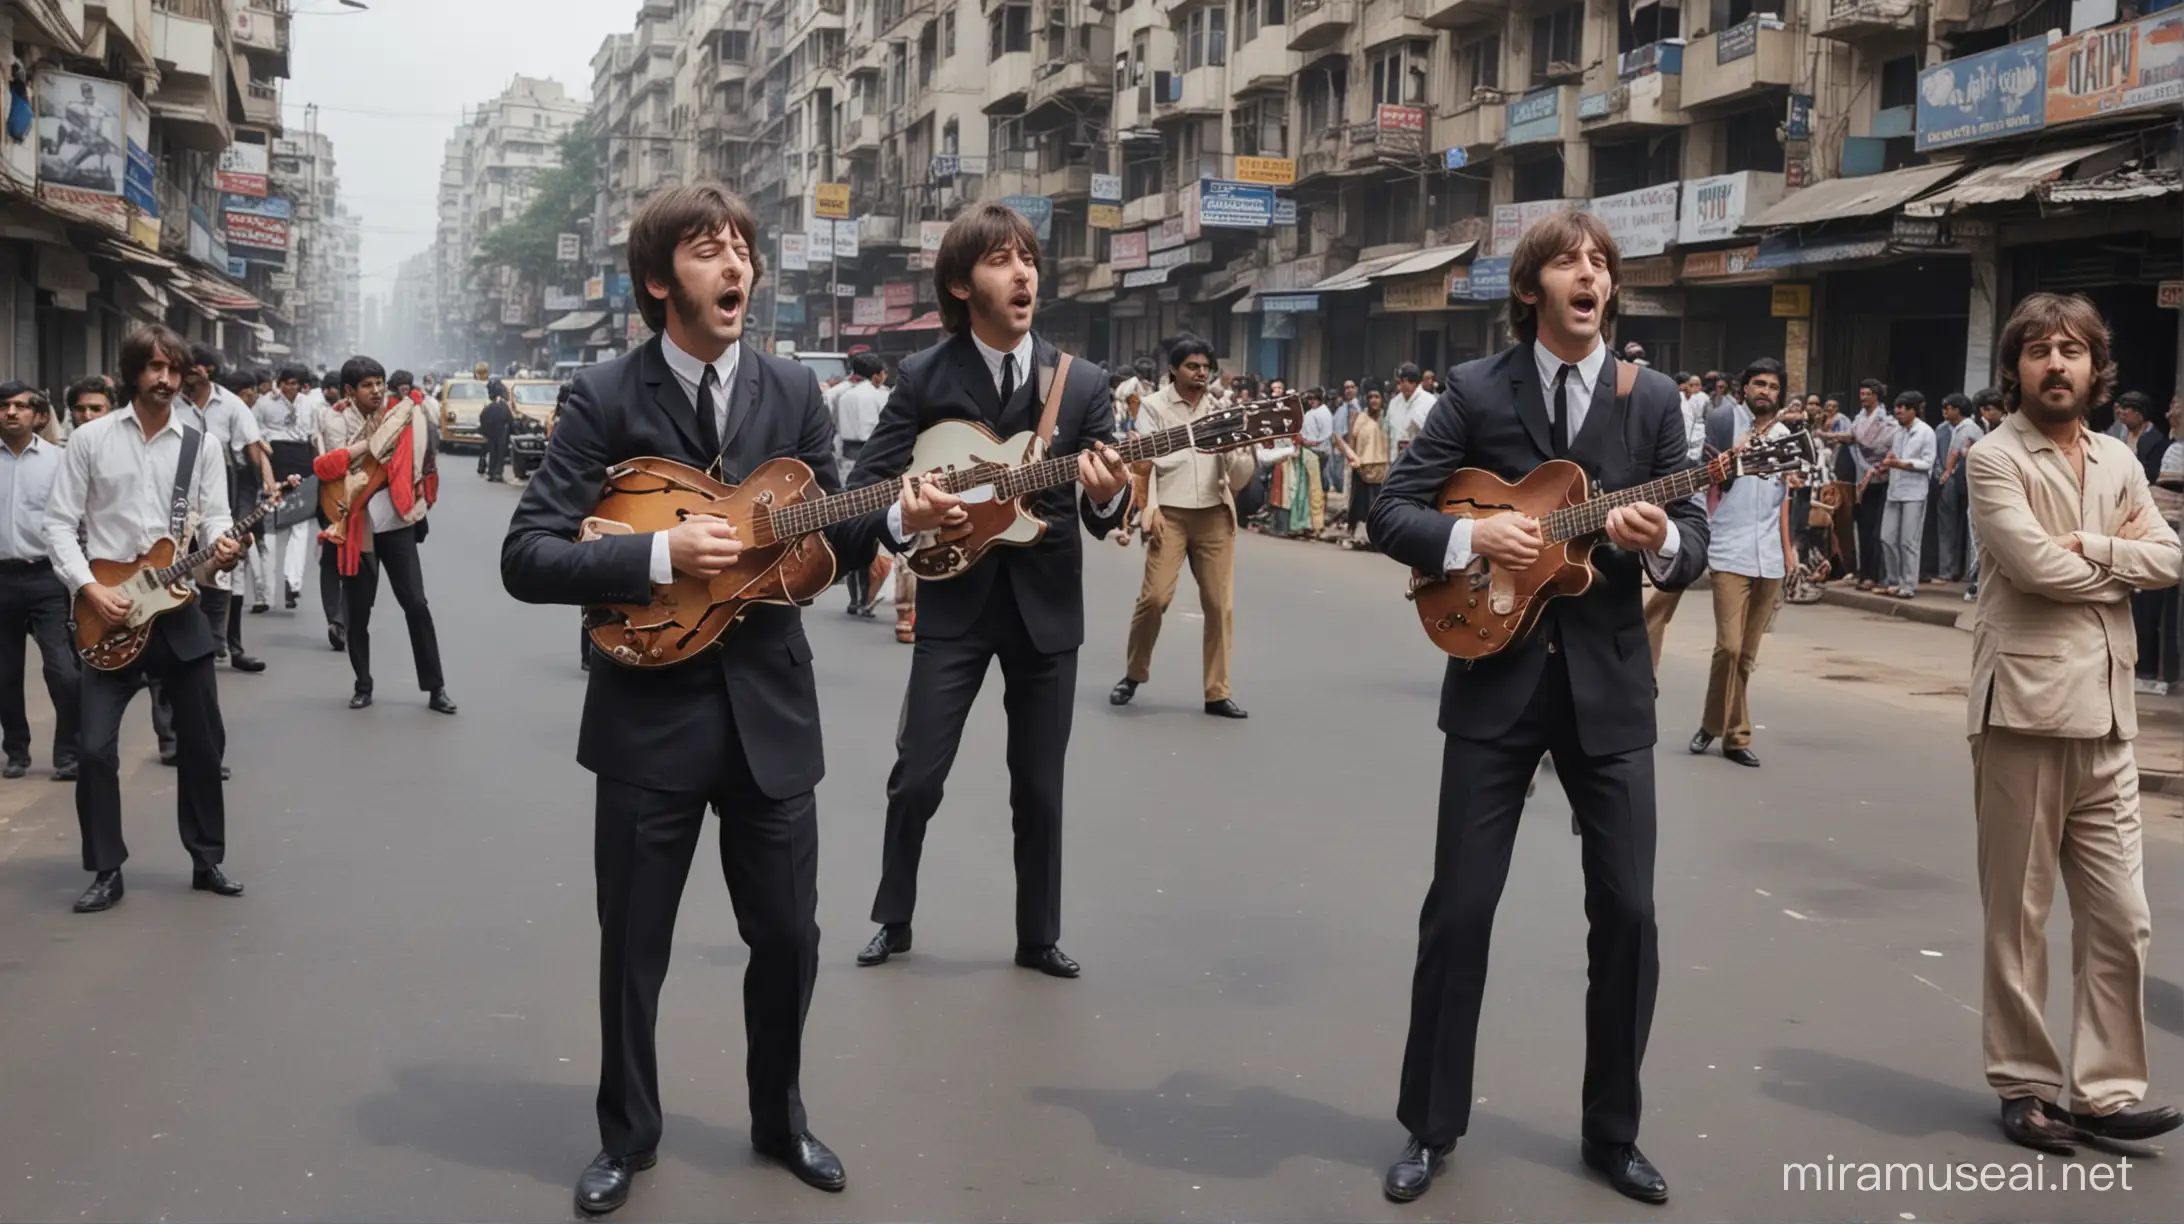 The Beatles Busking Vibrant Street Performance in Mumbai